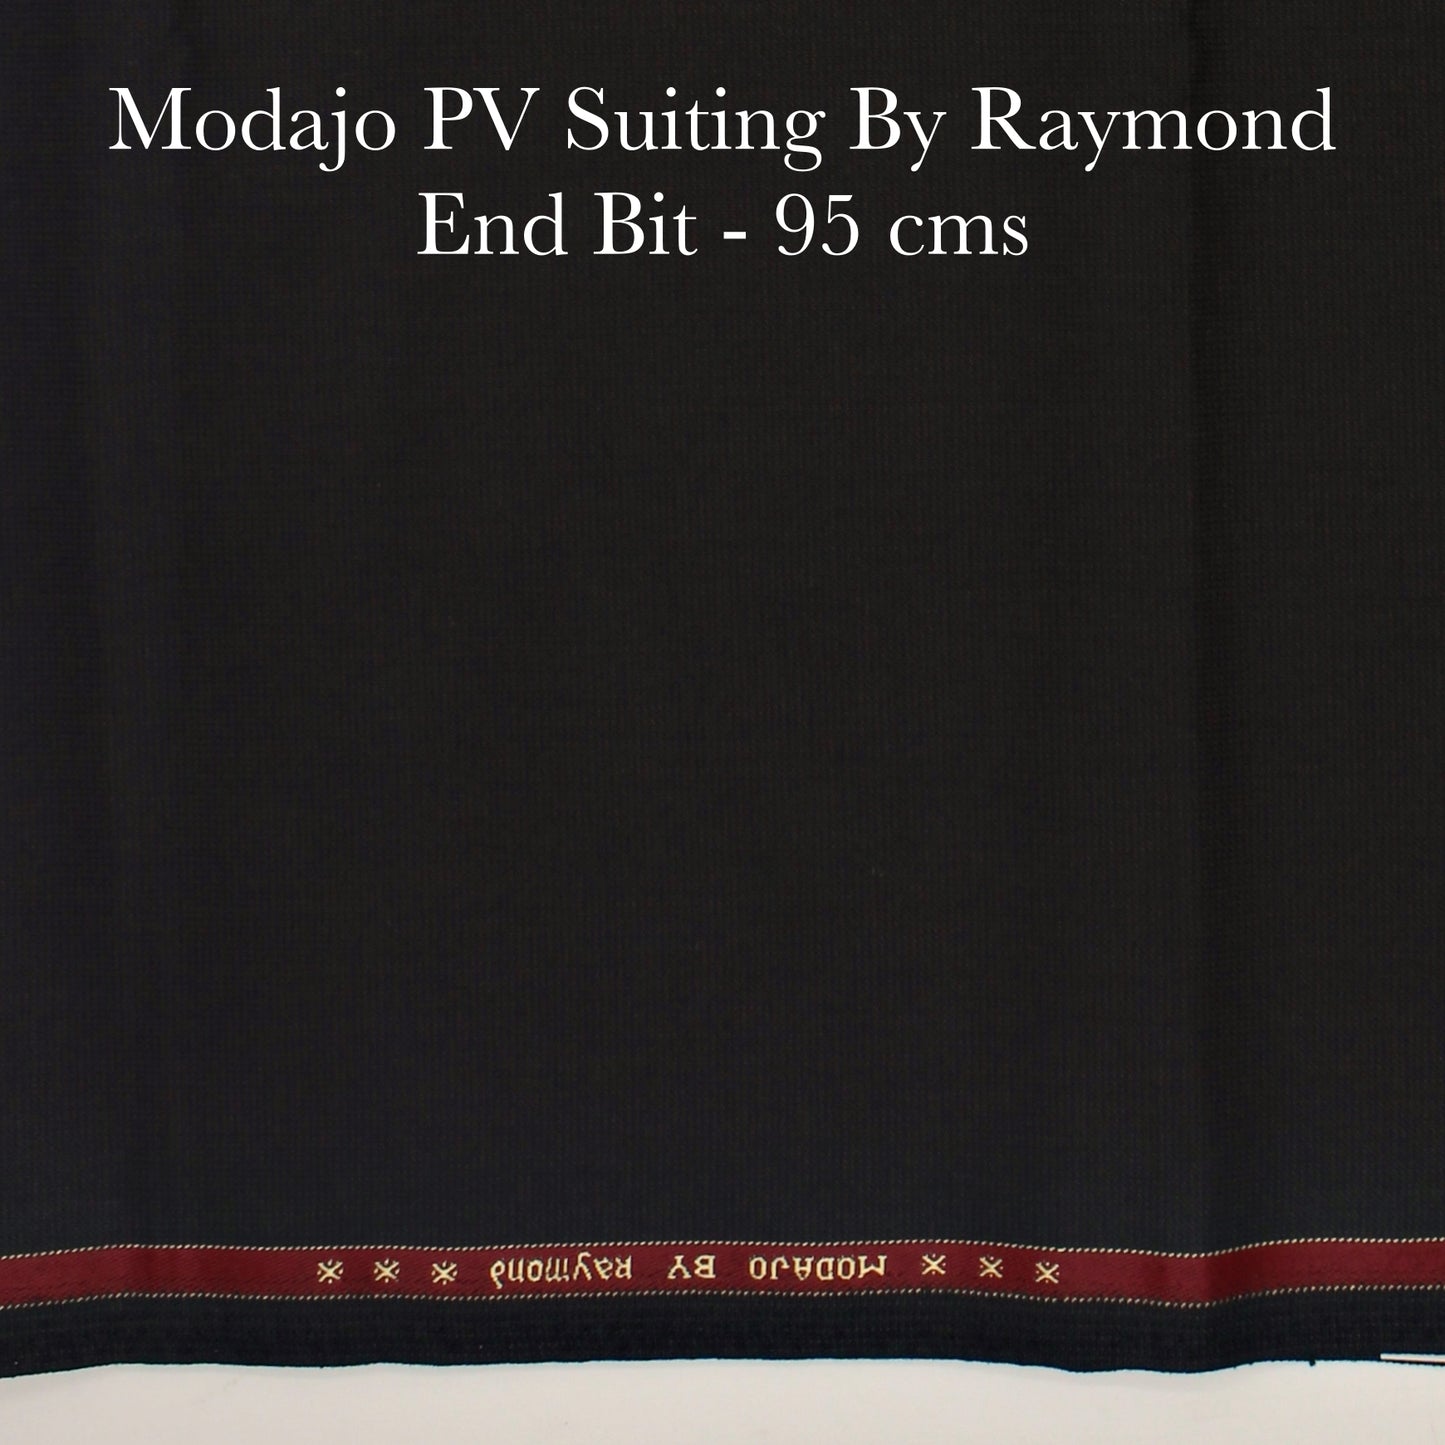 90 Cm Raymond Modaj PV Suiting - END BIT (50%)